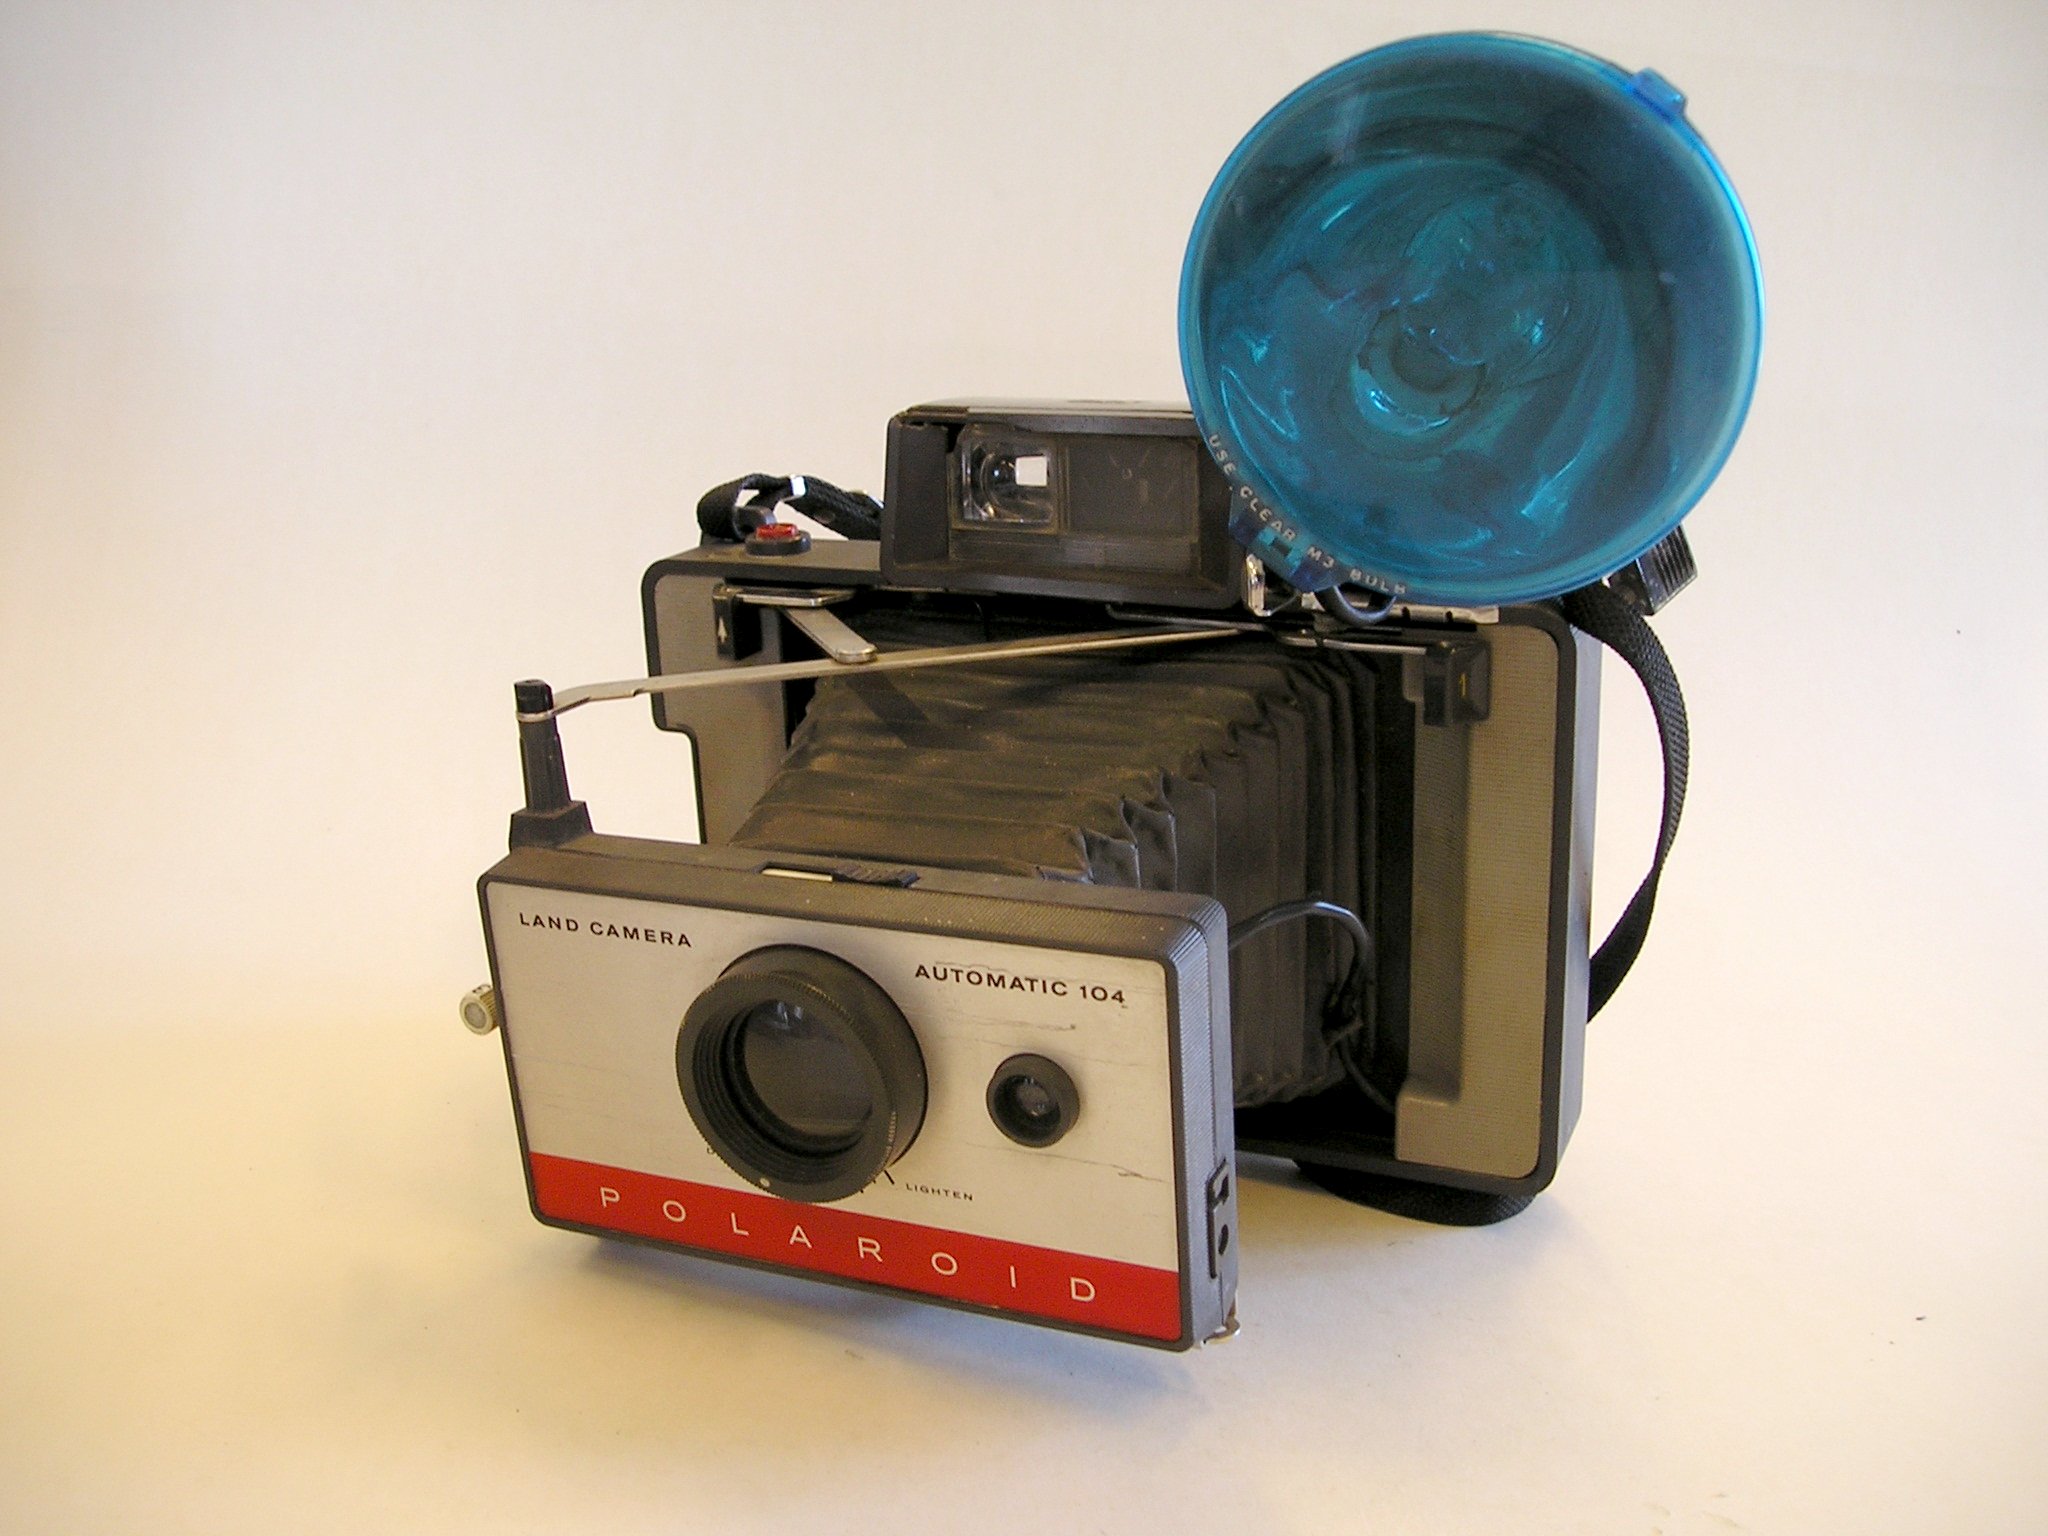 Polaroid Automatic 104